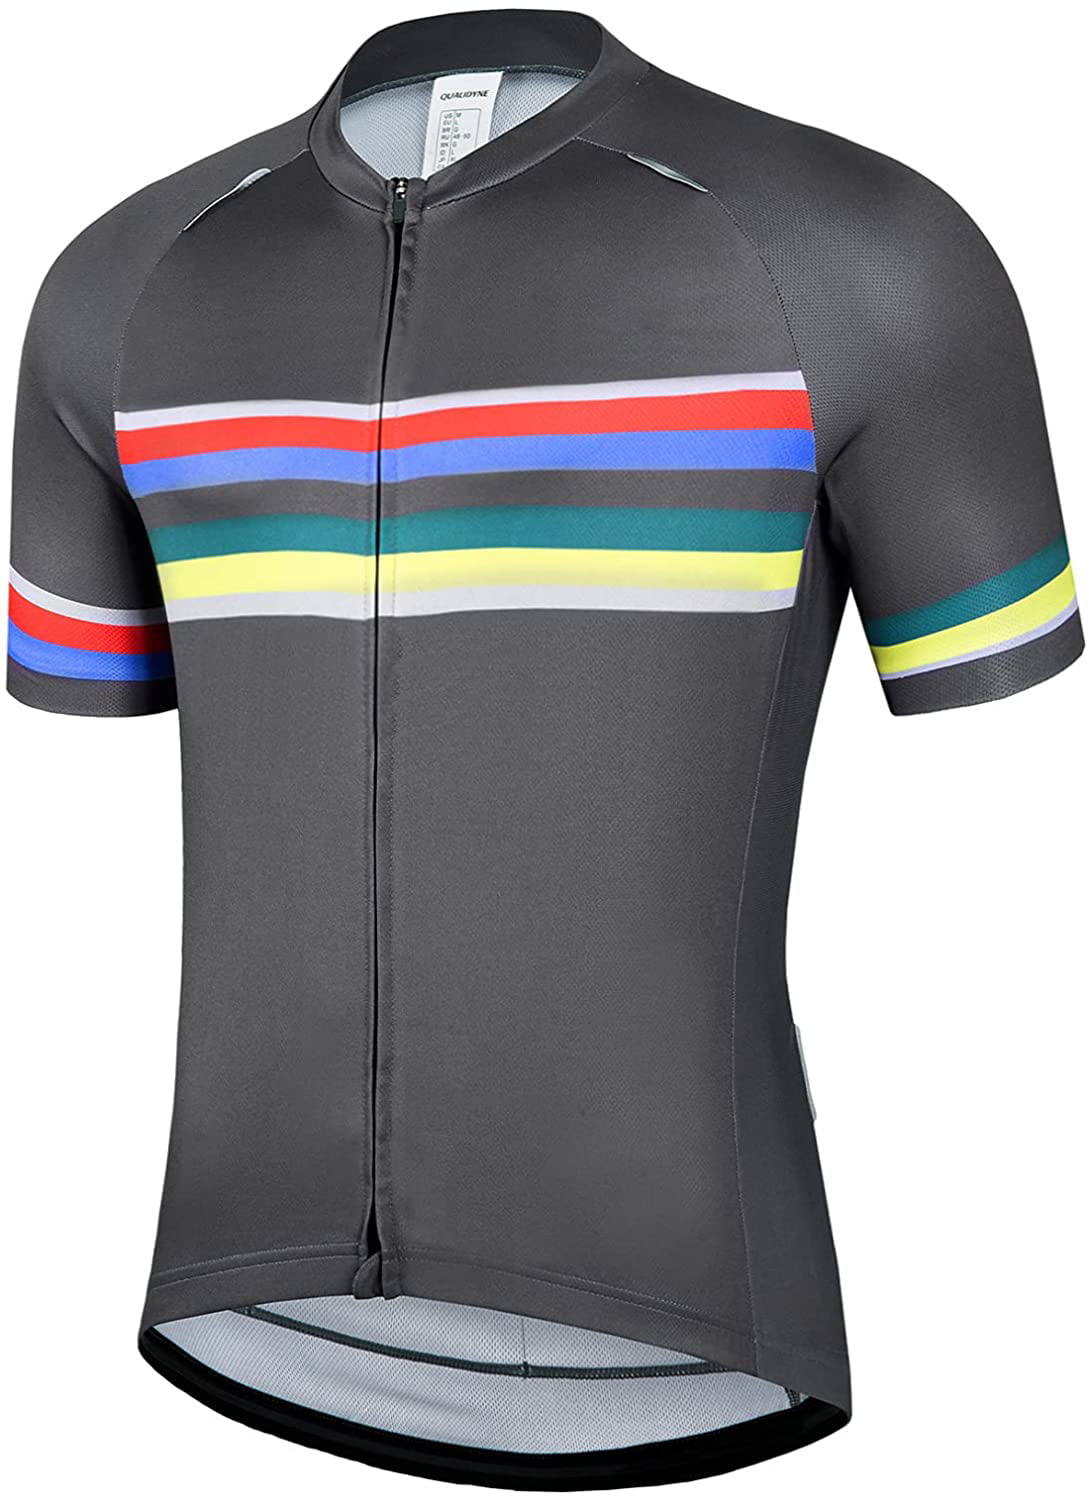 Men‘s Cycling Clothing Bicycle Jersey Sportswear Short Sleeve Bike Top T-Shirt 